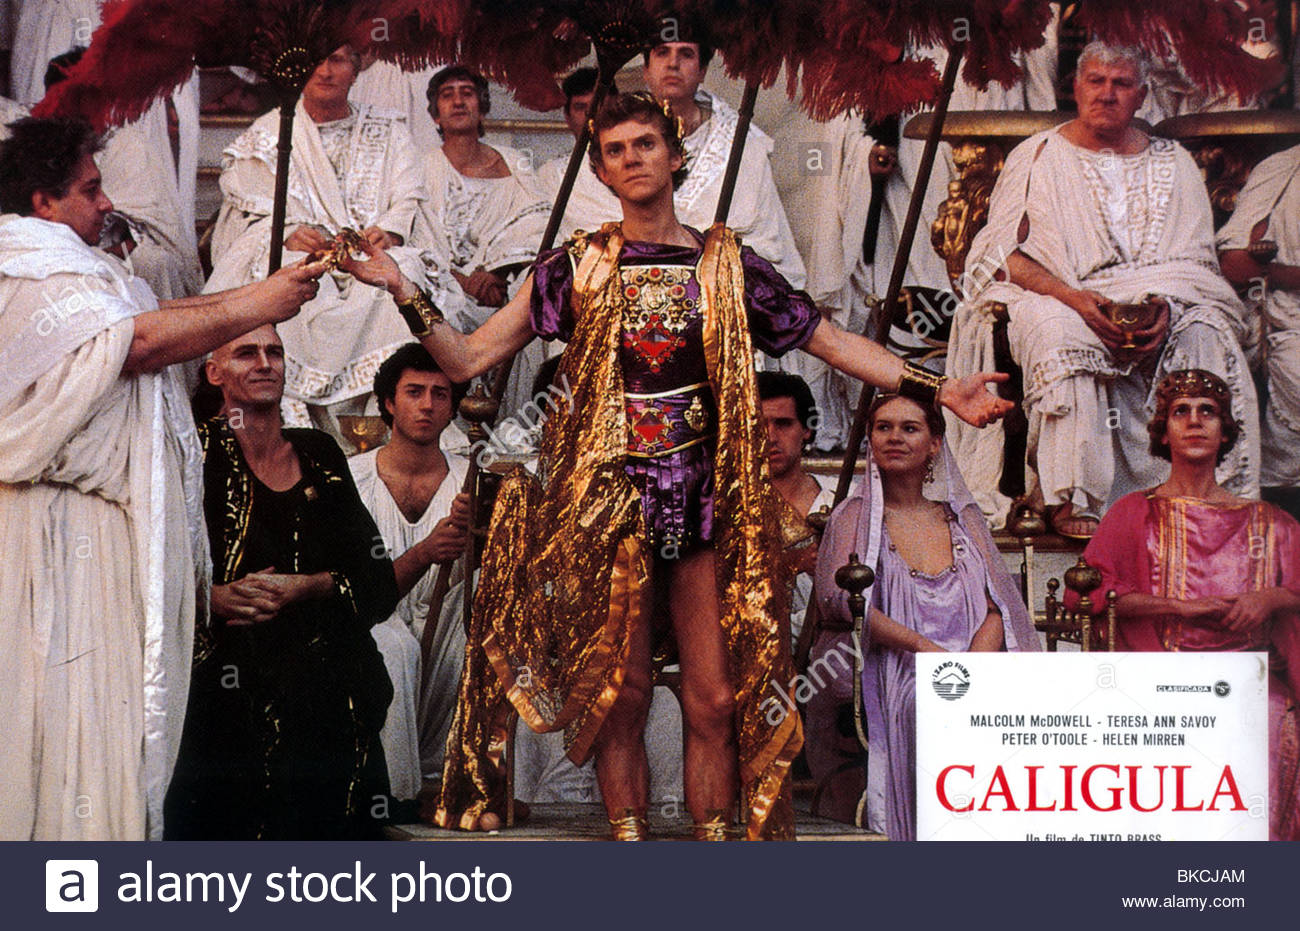 Caligula Uncut Version Youtube